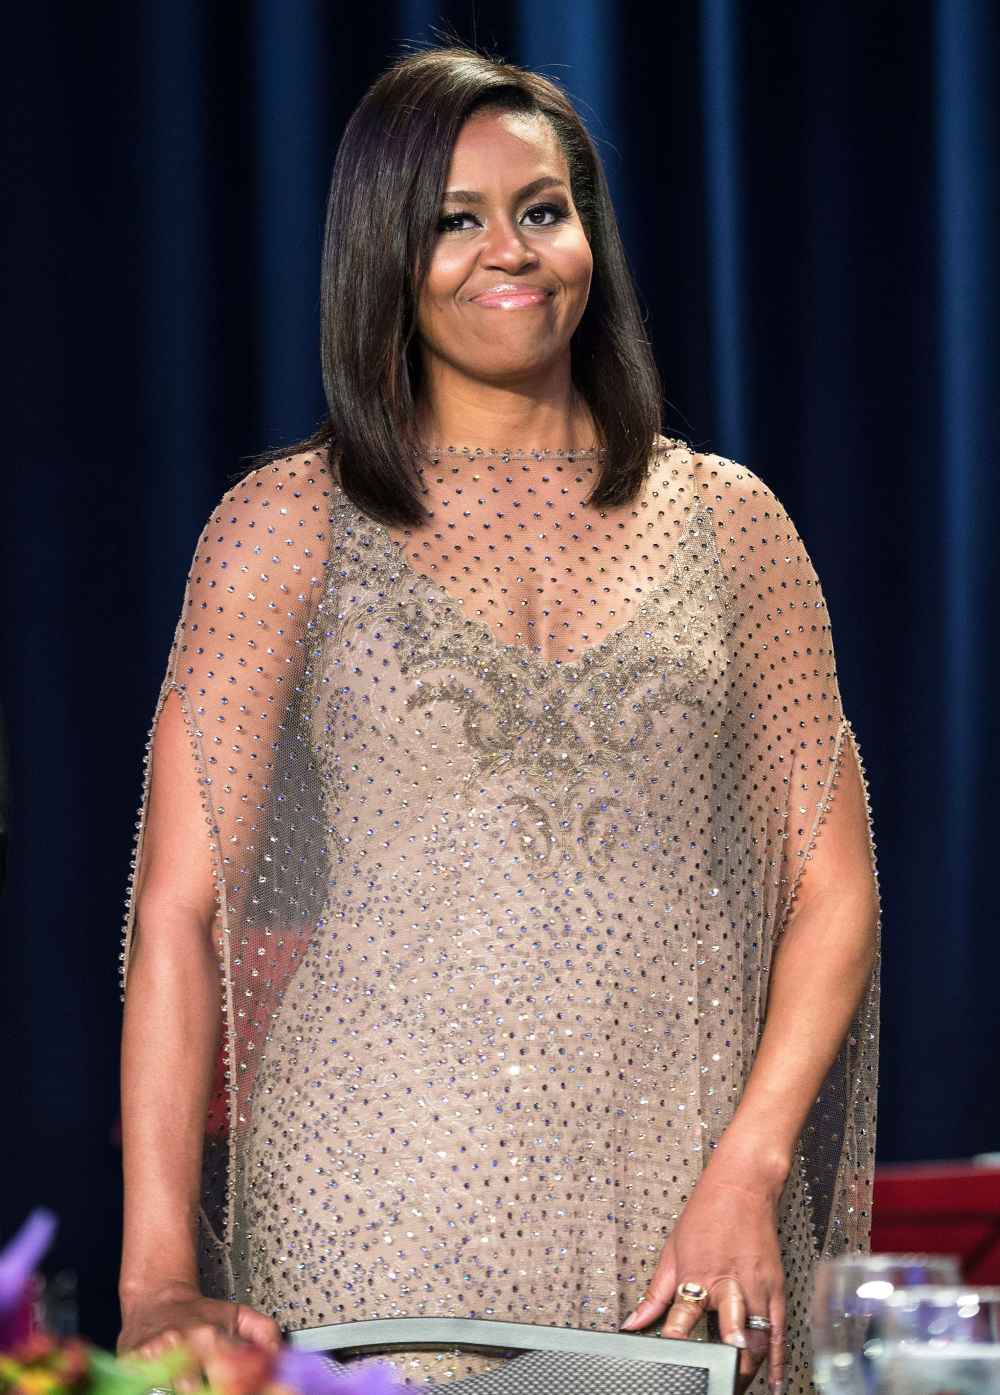 Michele Obama